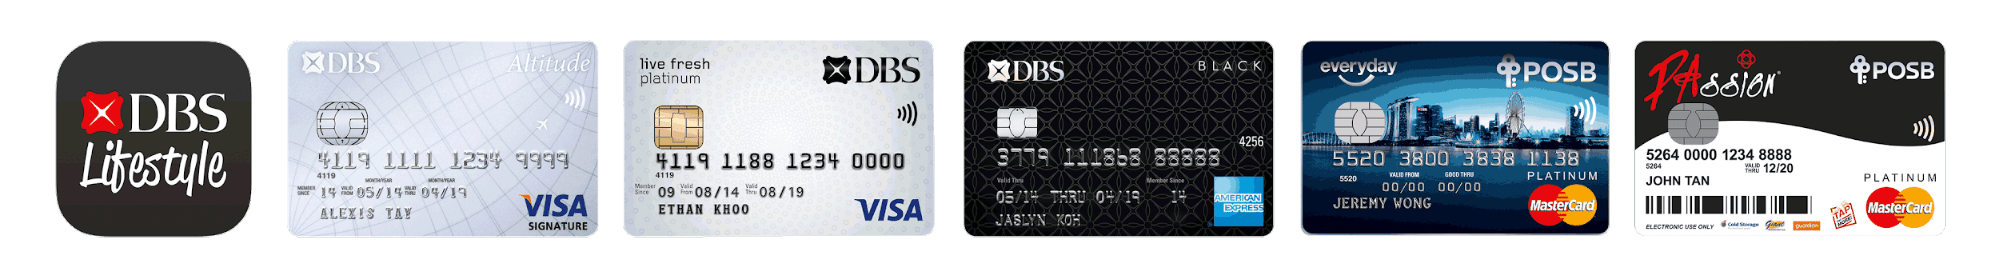 DBS/POSB cards